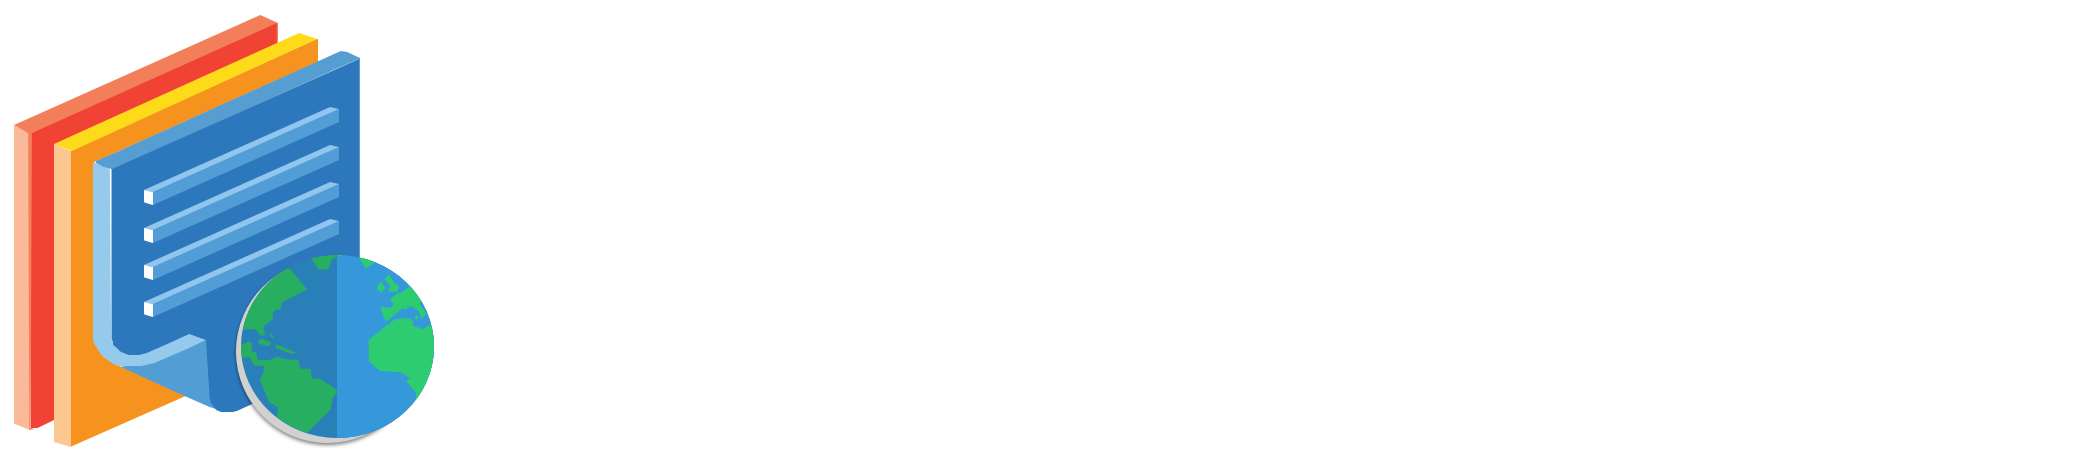 gdocweb Logo